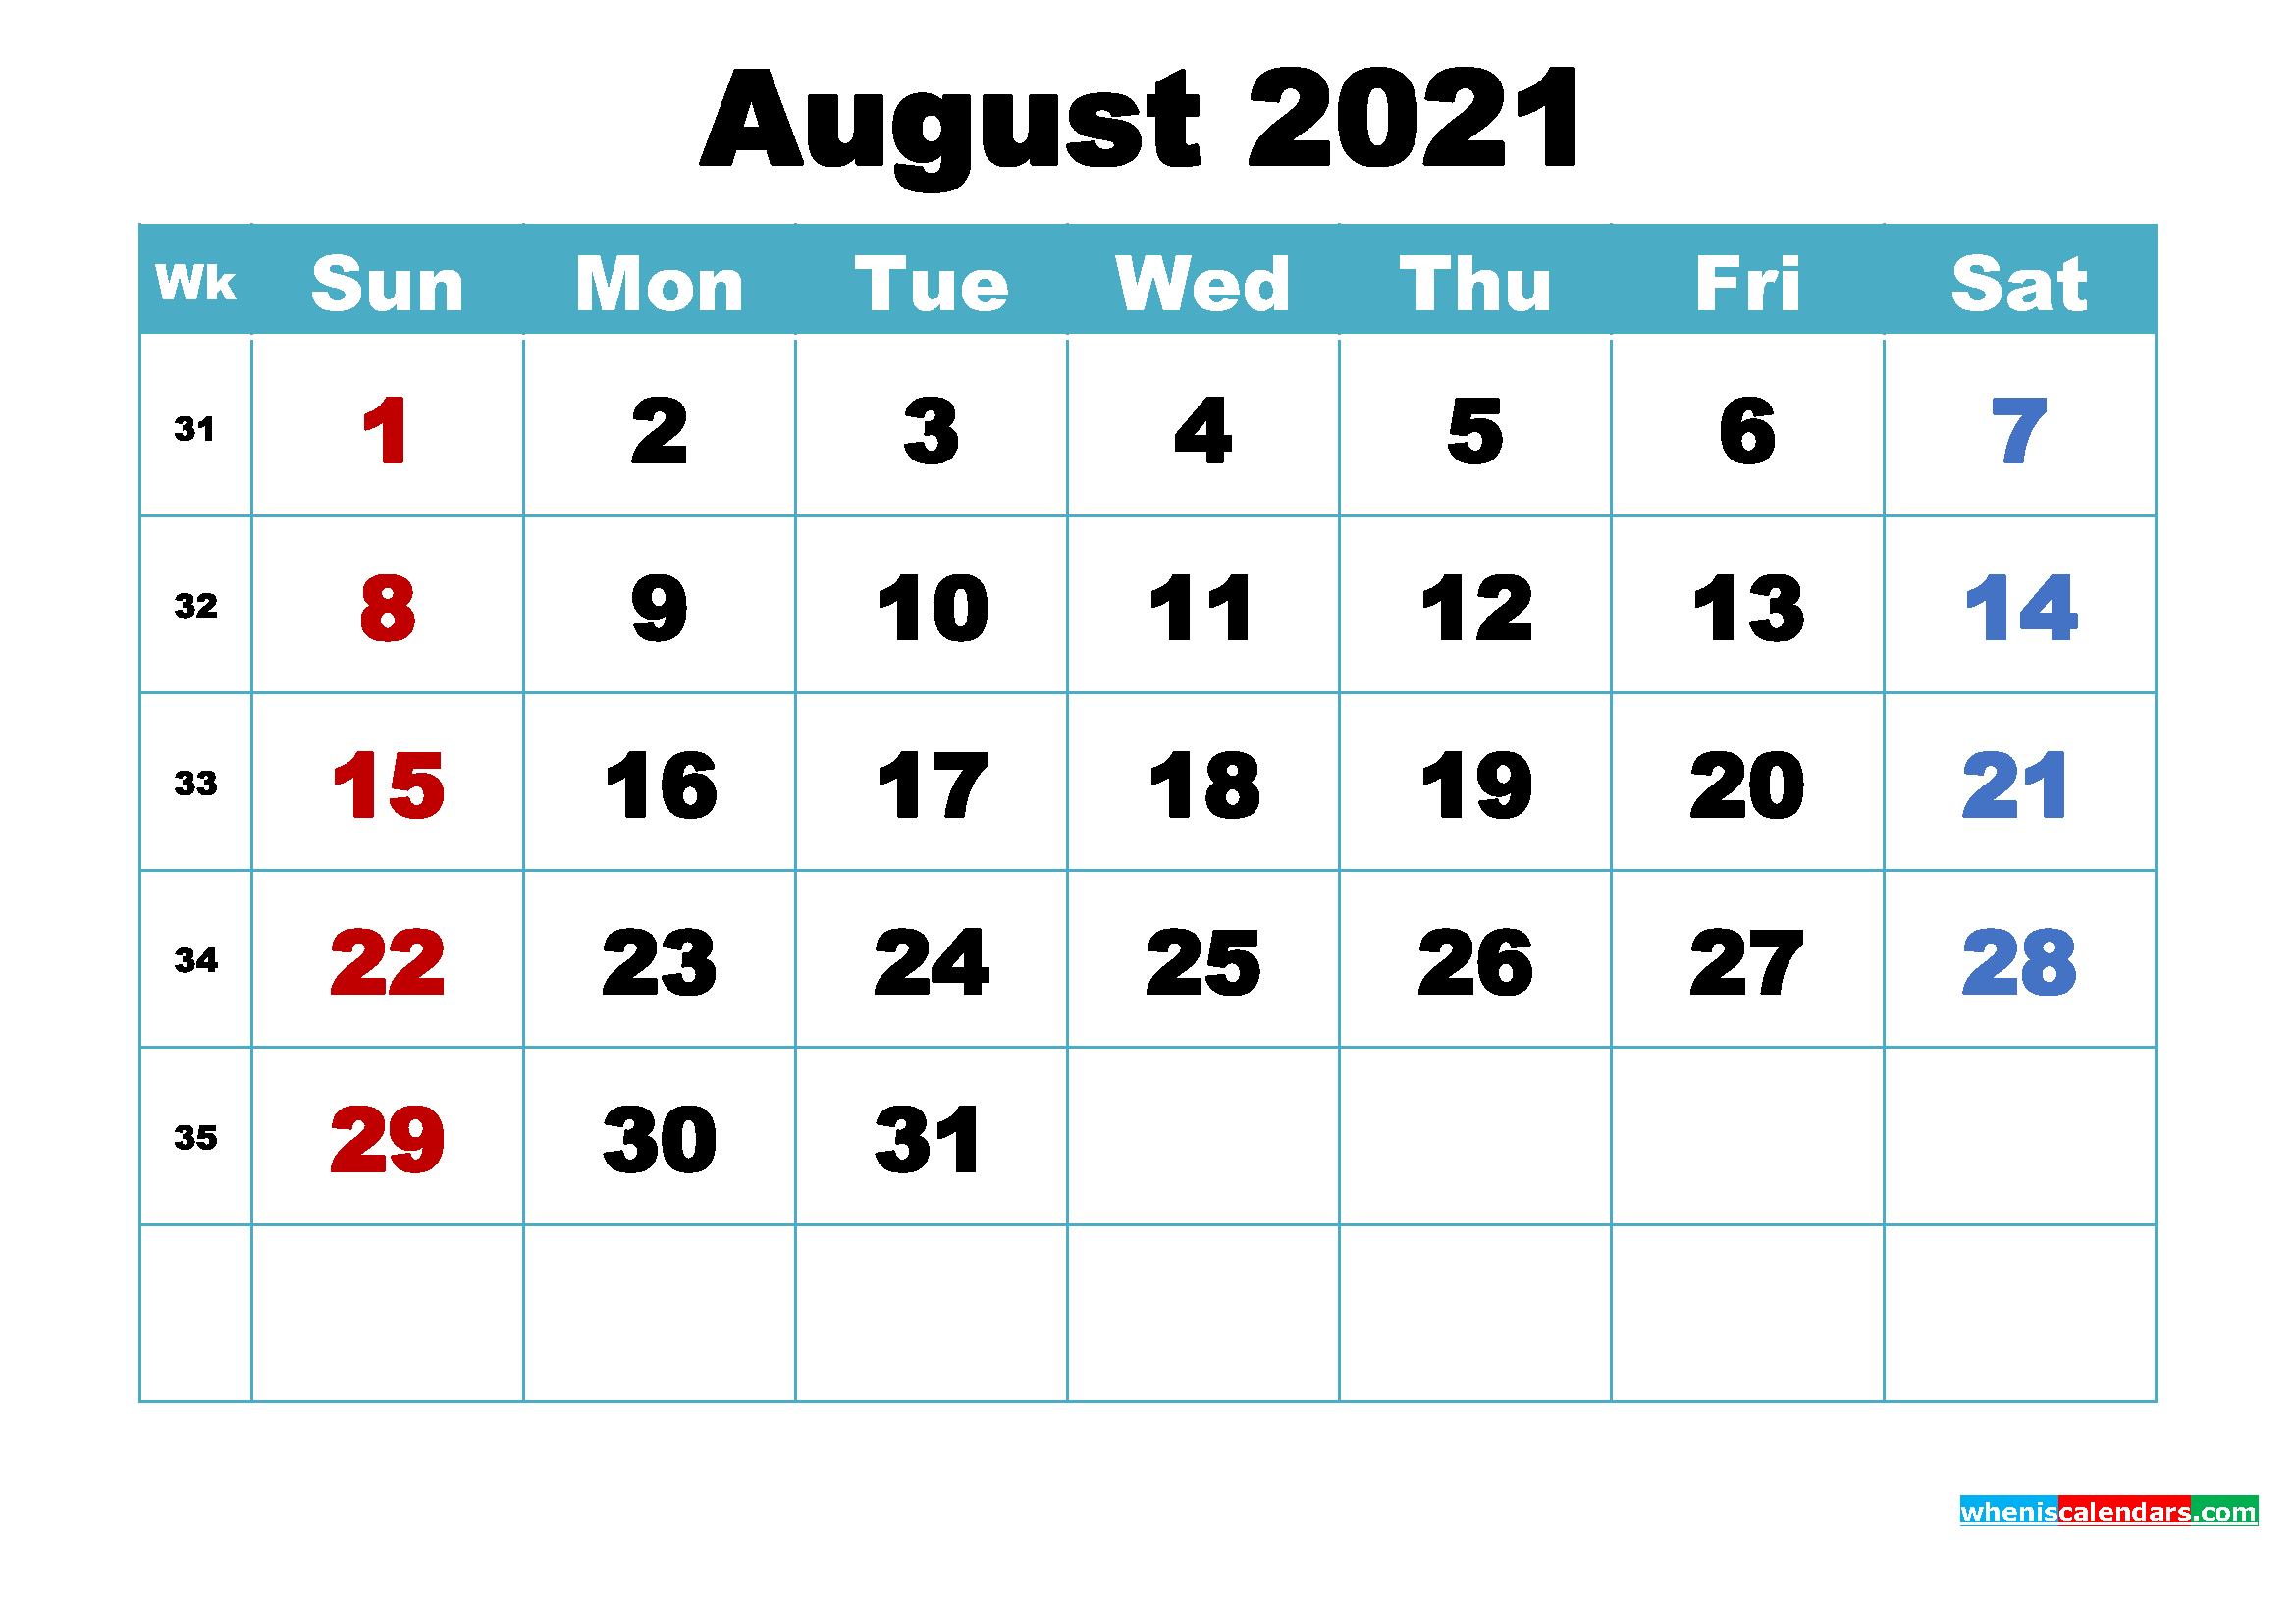 august 2021 word calendar Printable August 2021 Calendar By Month Free Printable 2020 Monthly Calendar With Holidays august 2021 word calendar